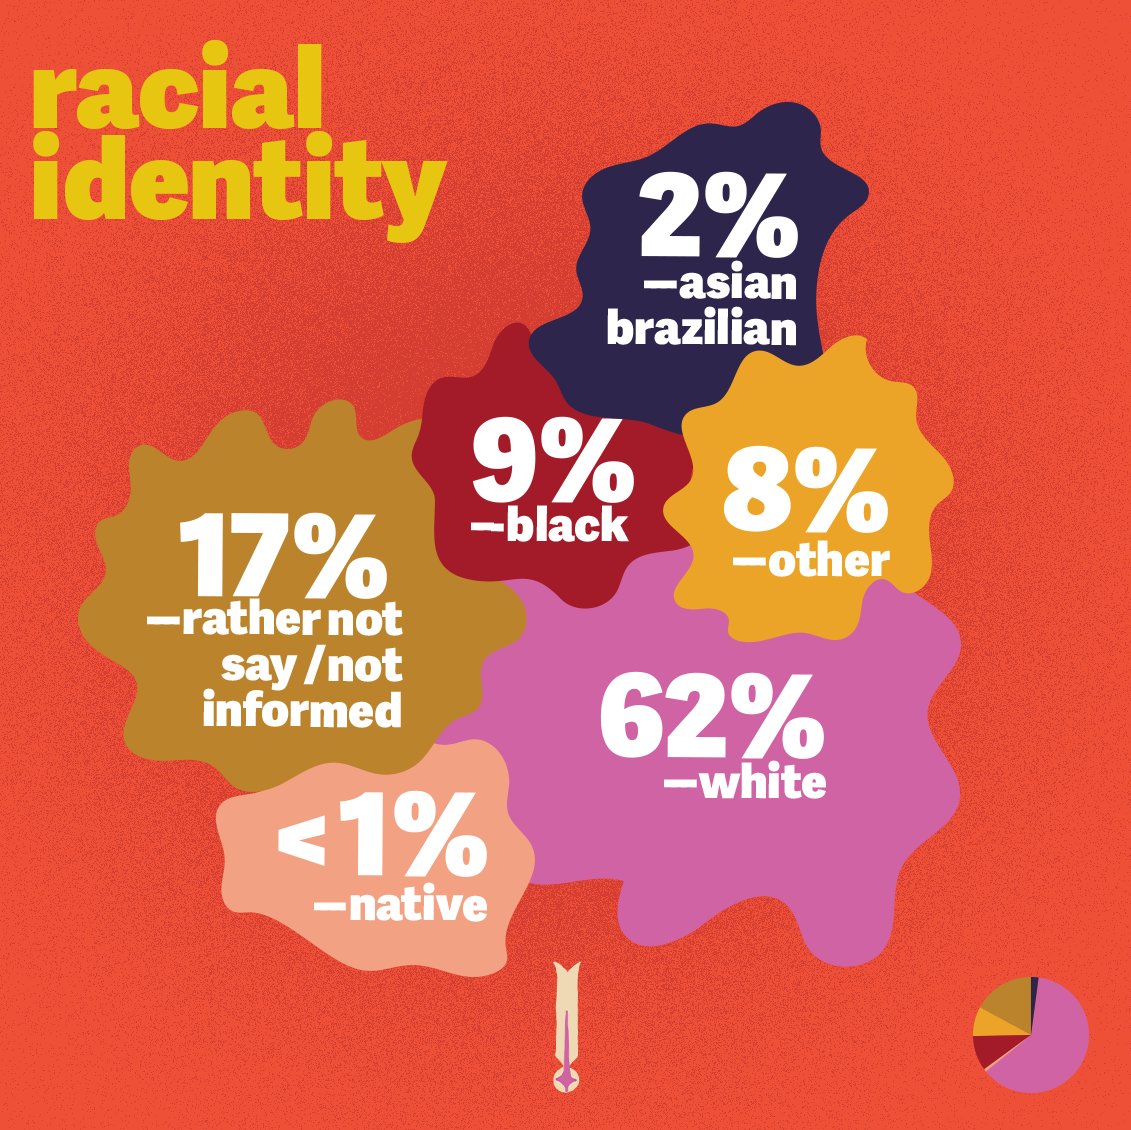 Racial-identity